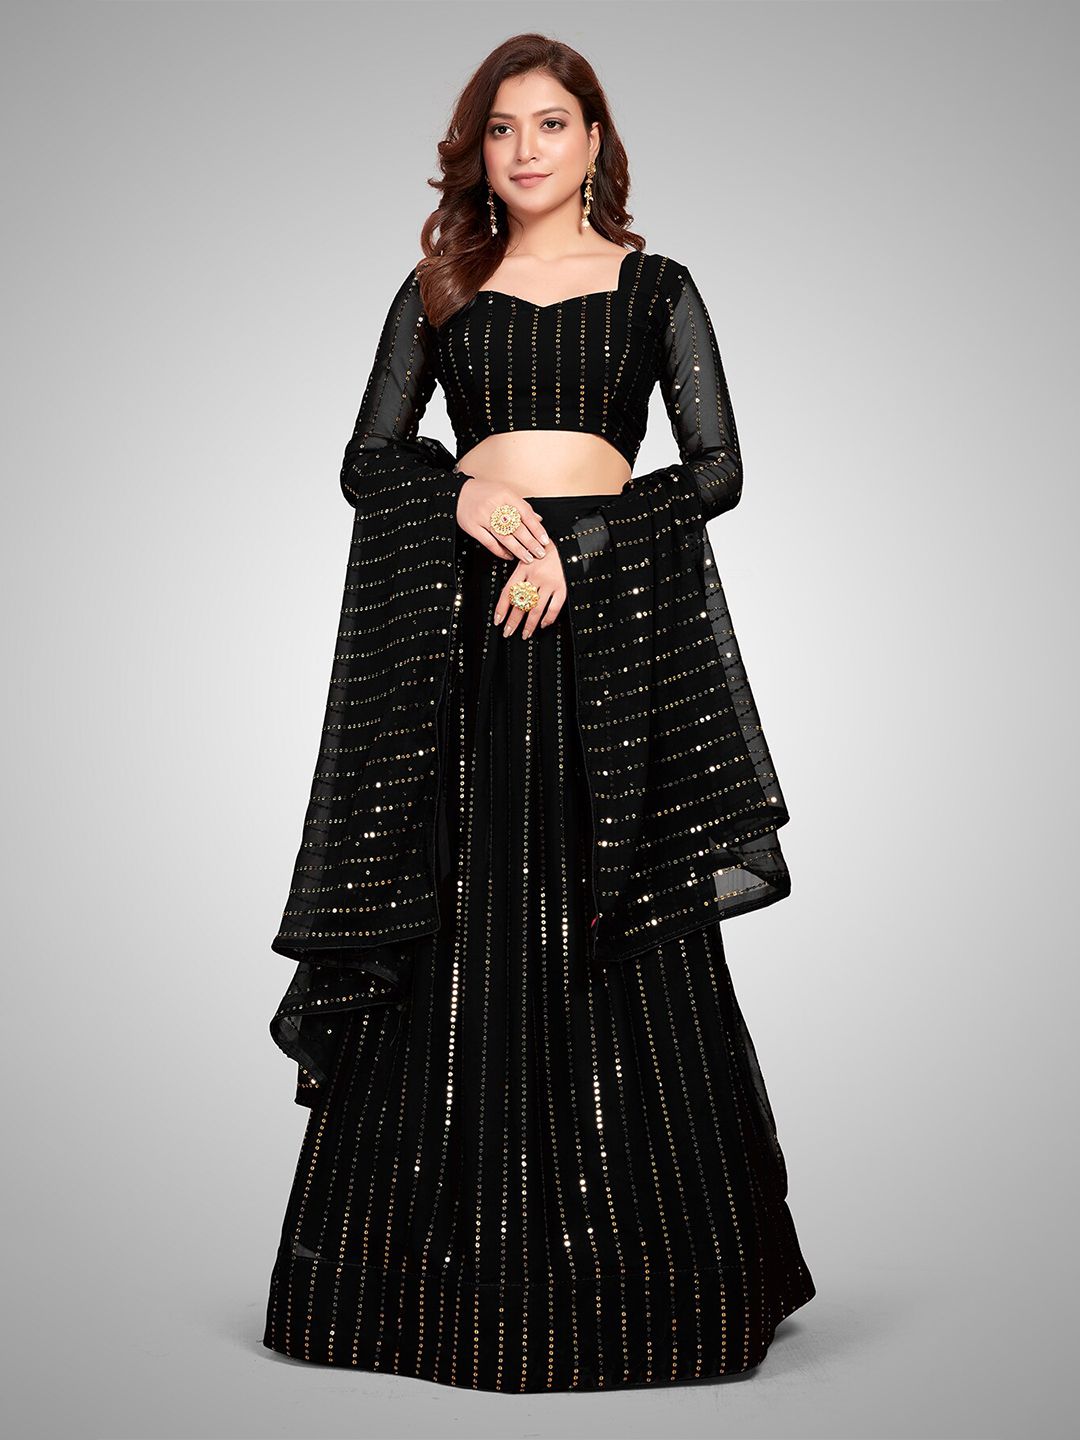 Mitera Black Embellished  Semi-Stitched Lehenga Choli Unstitched Blouse With Dupatta Price in India